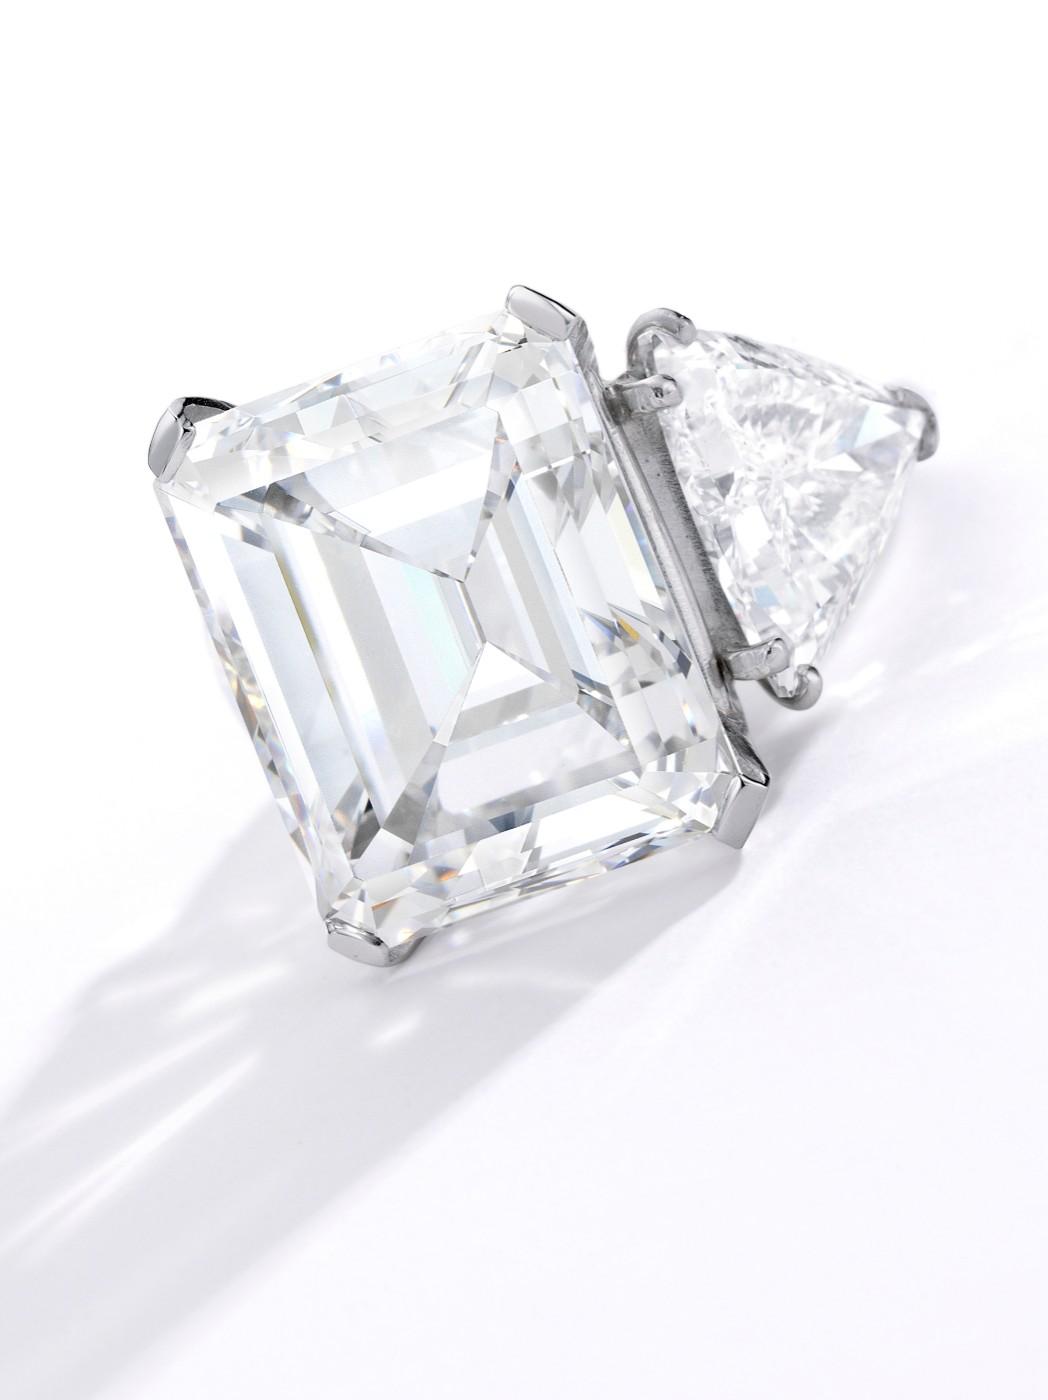 Barbara Sinatra's Diamond Engagement Ring